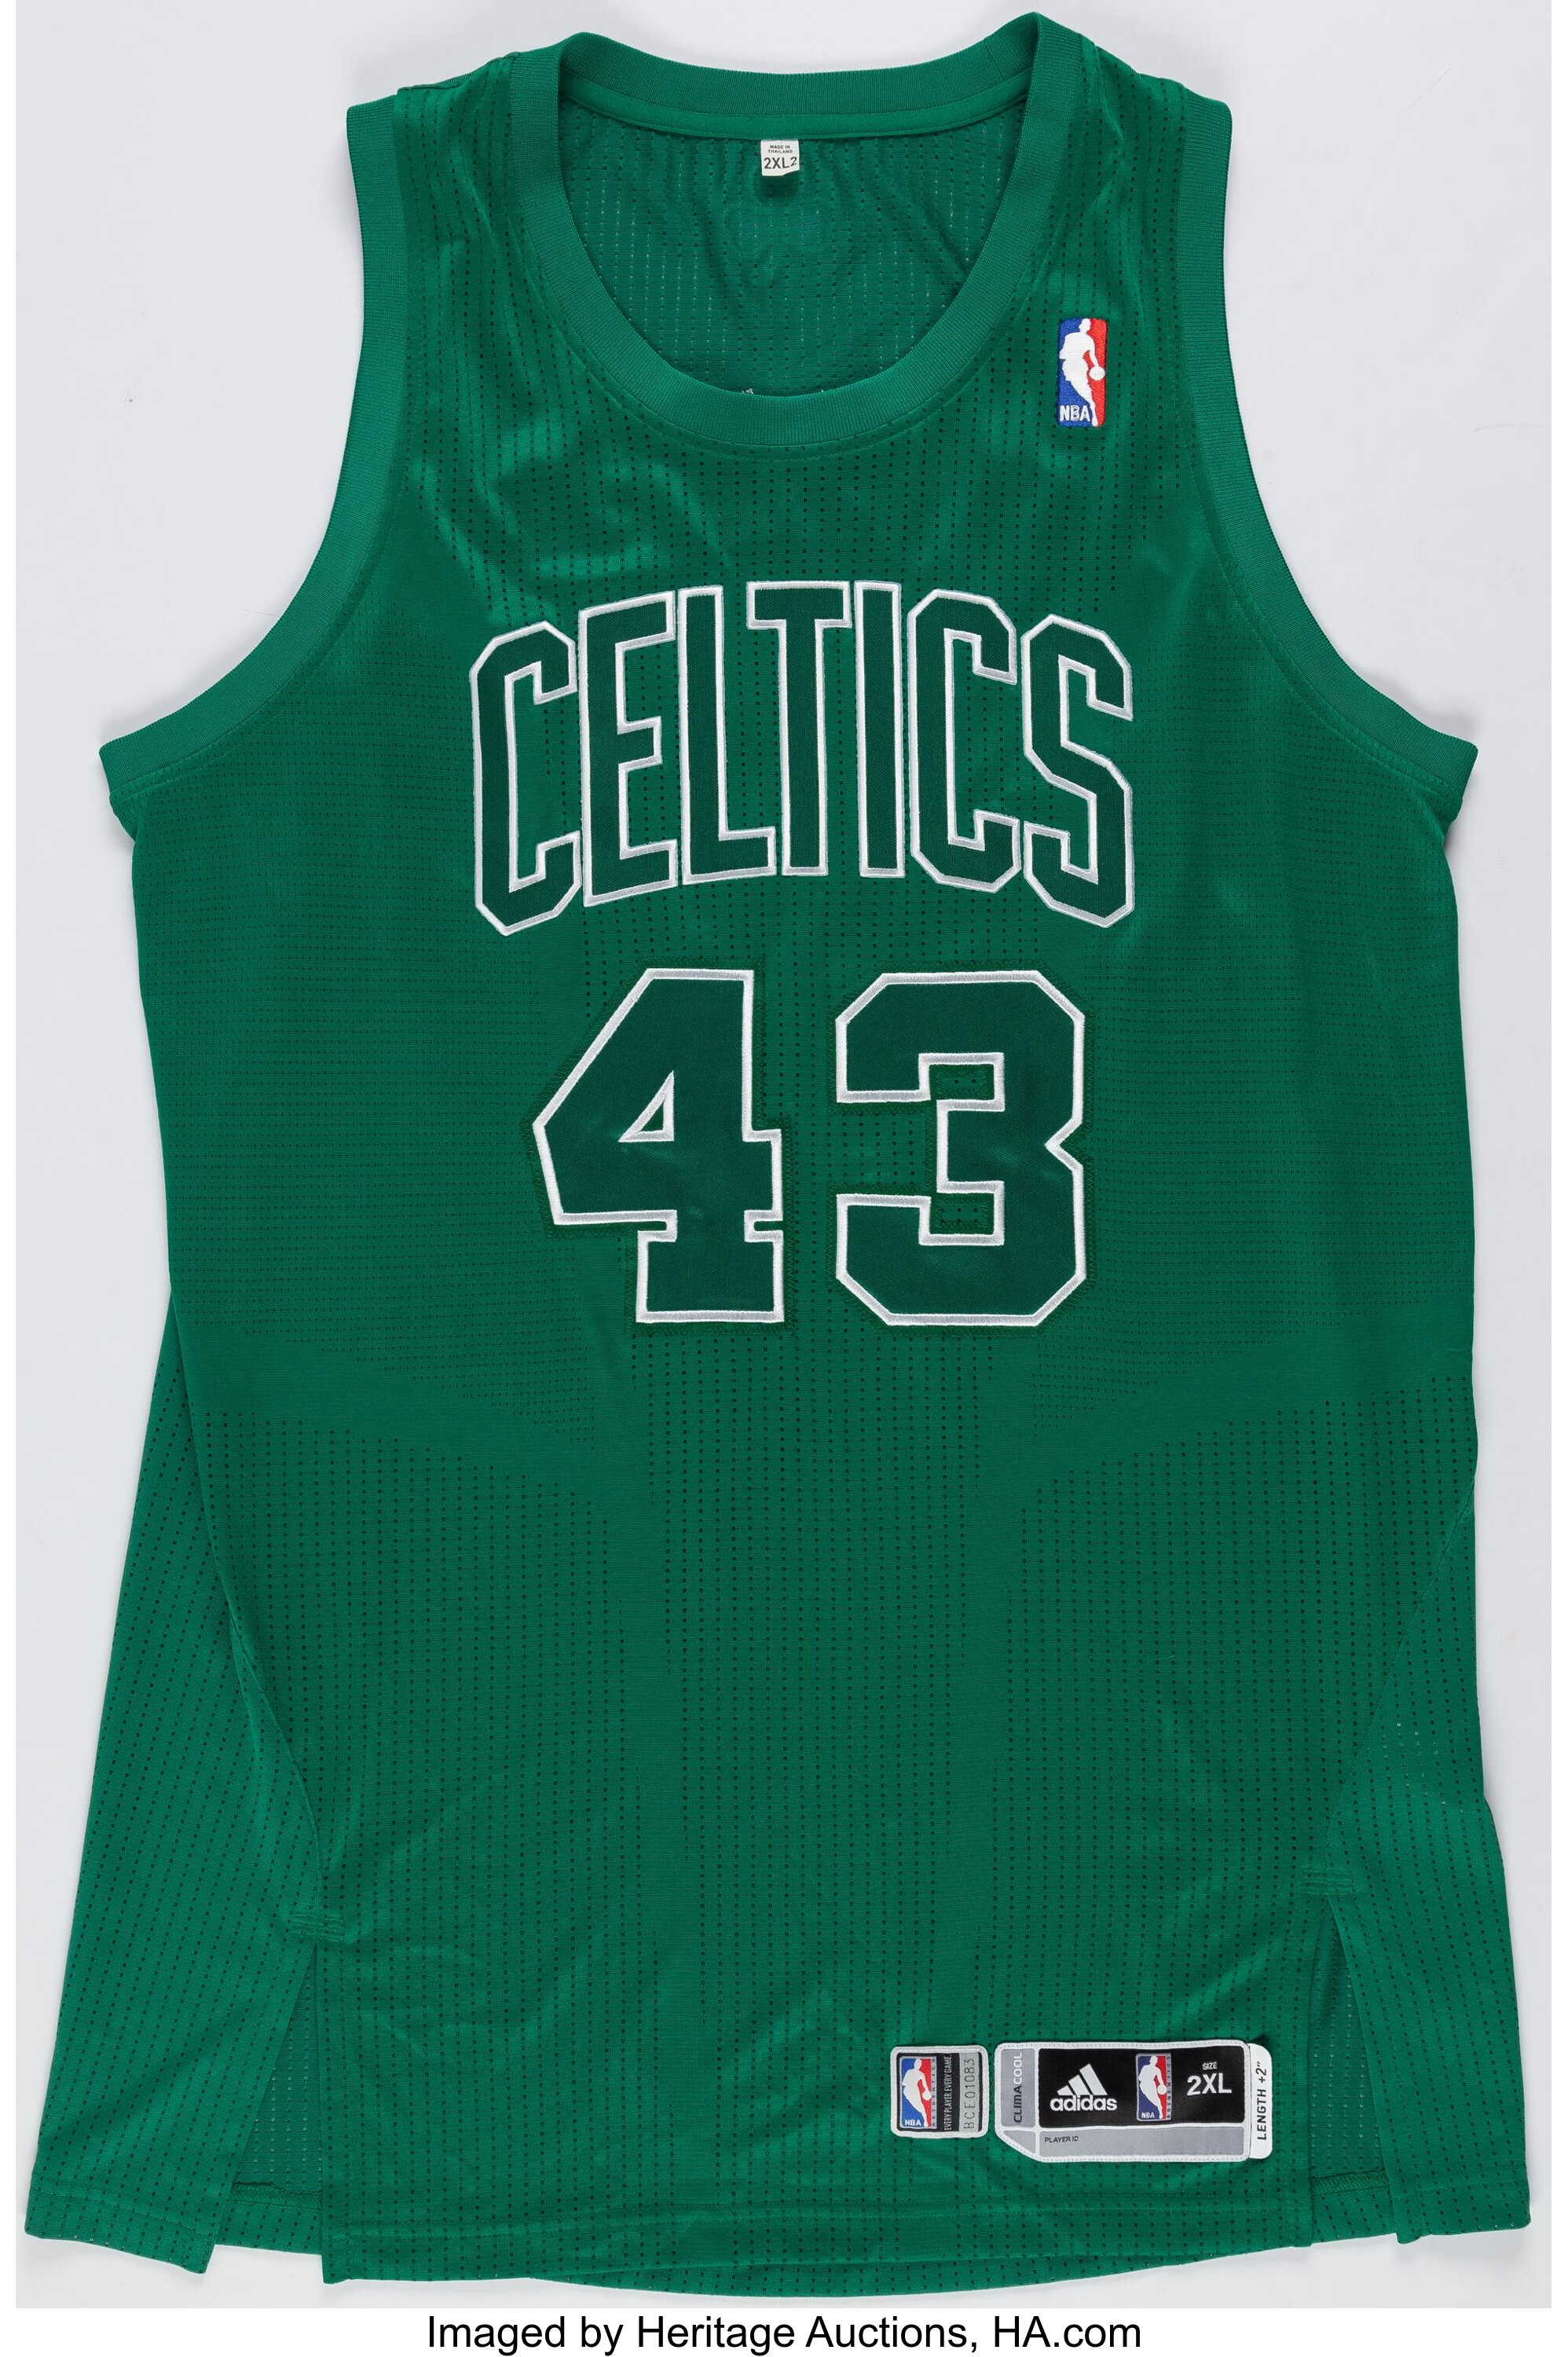 2012 Kris Joseph Game Worn Boston Celtics Christmas Day Jersey Lot 44126 Heritage Auctions heritage auctions sports